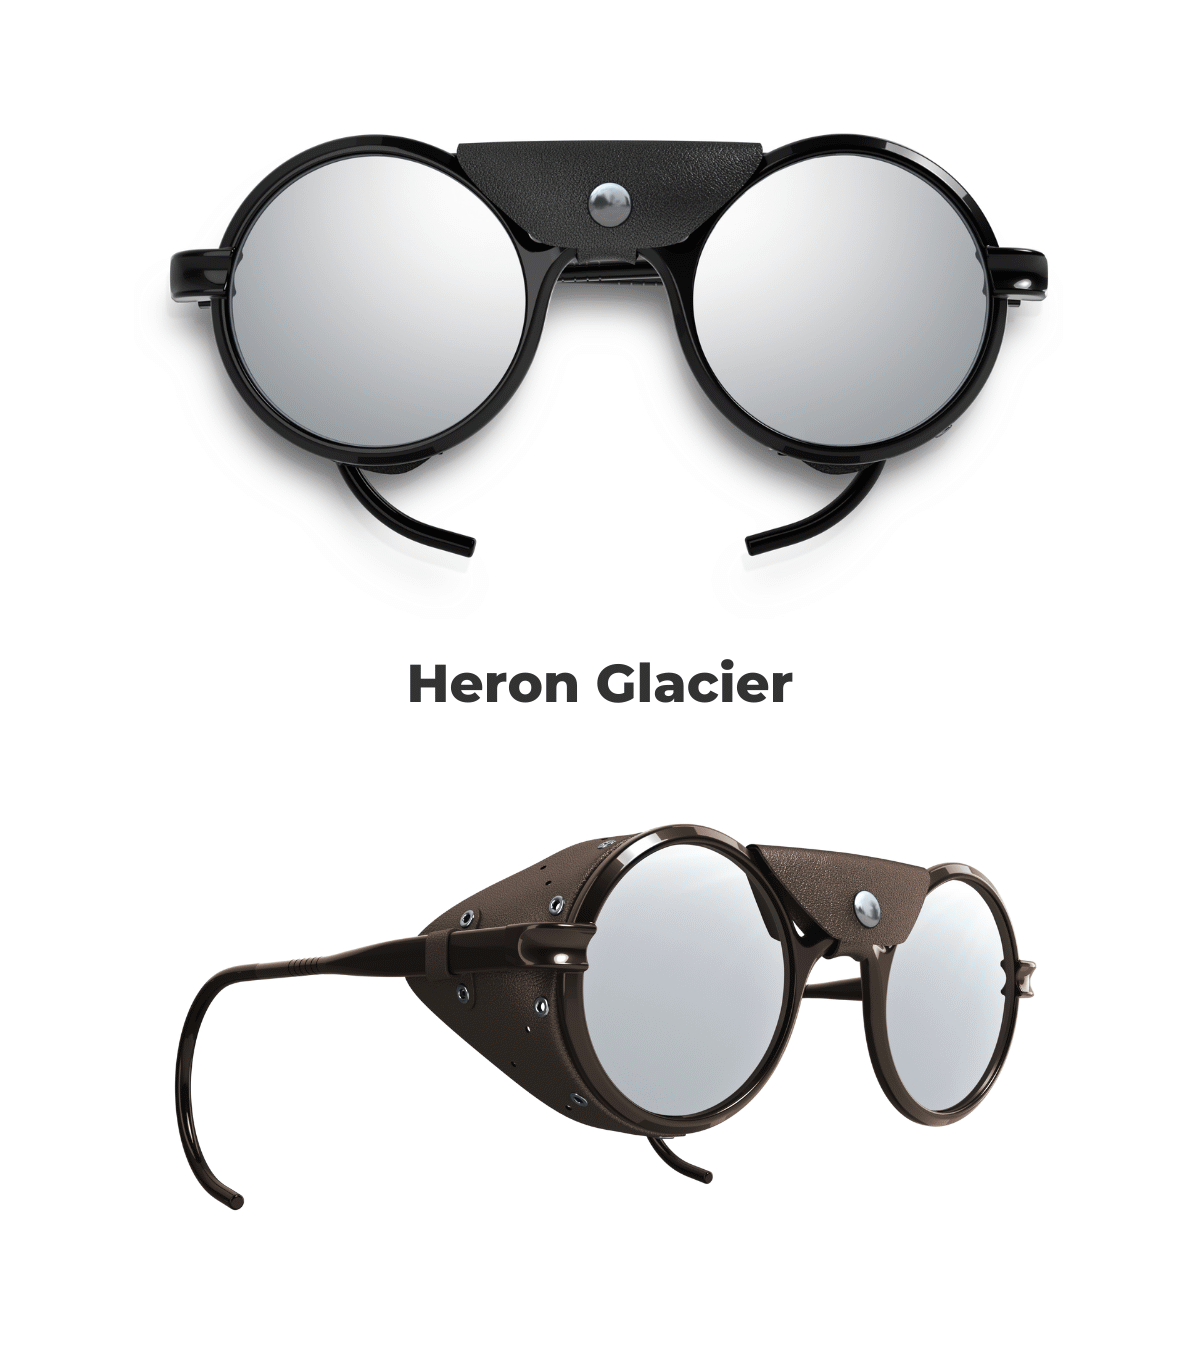 The Vallon Heron Glacier ski and alpine sunglasses